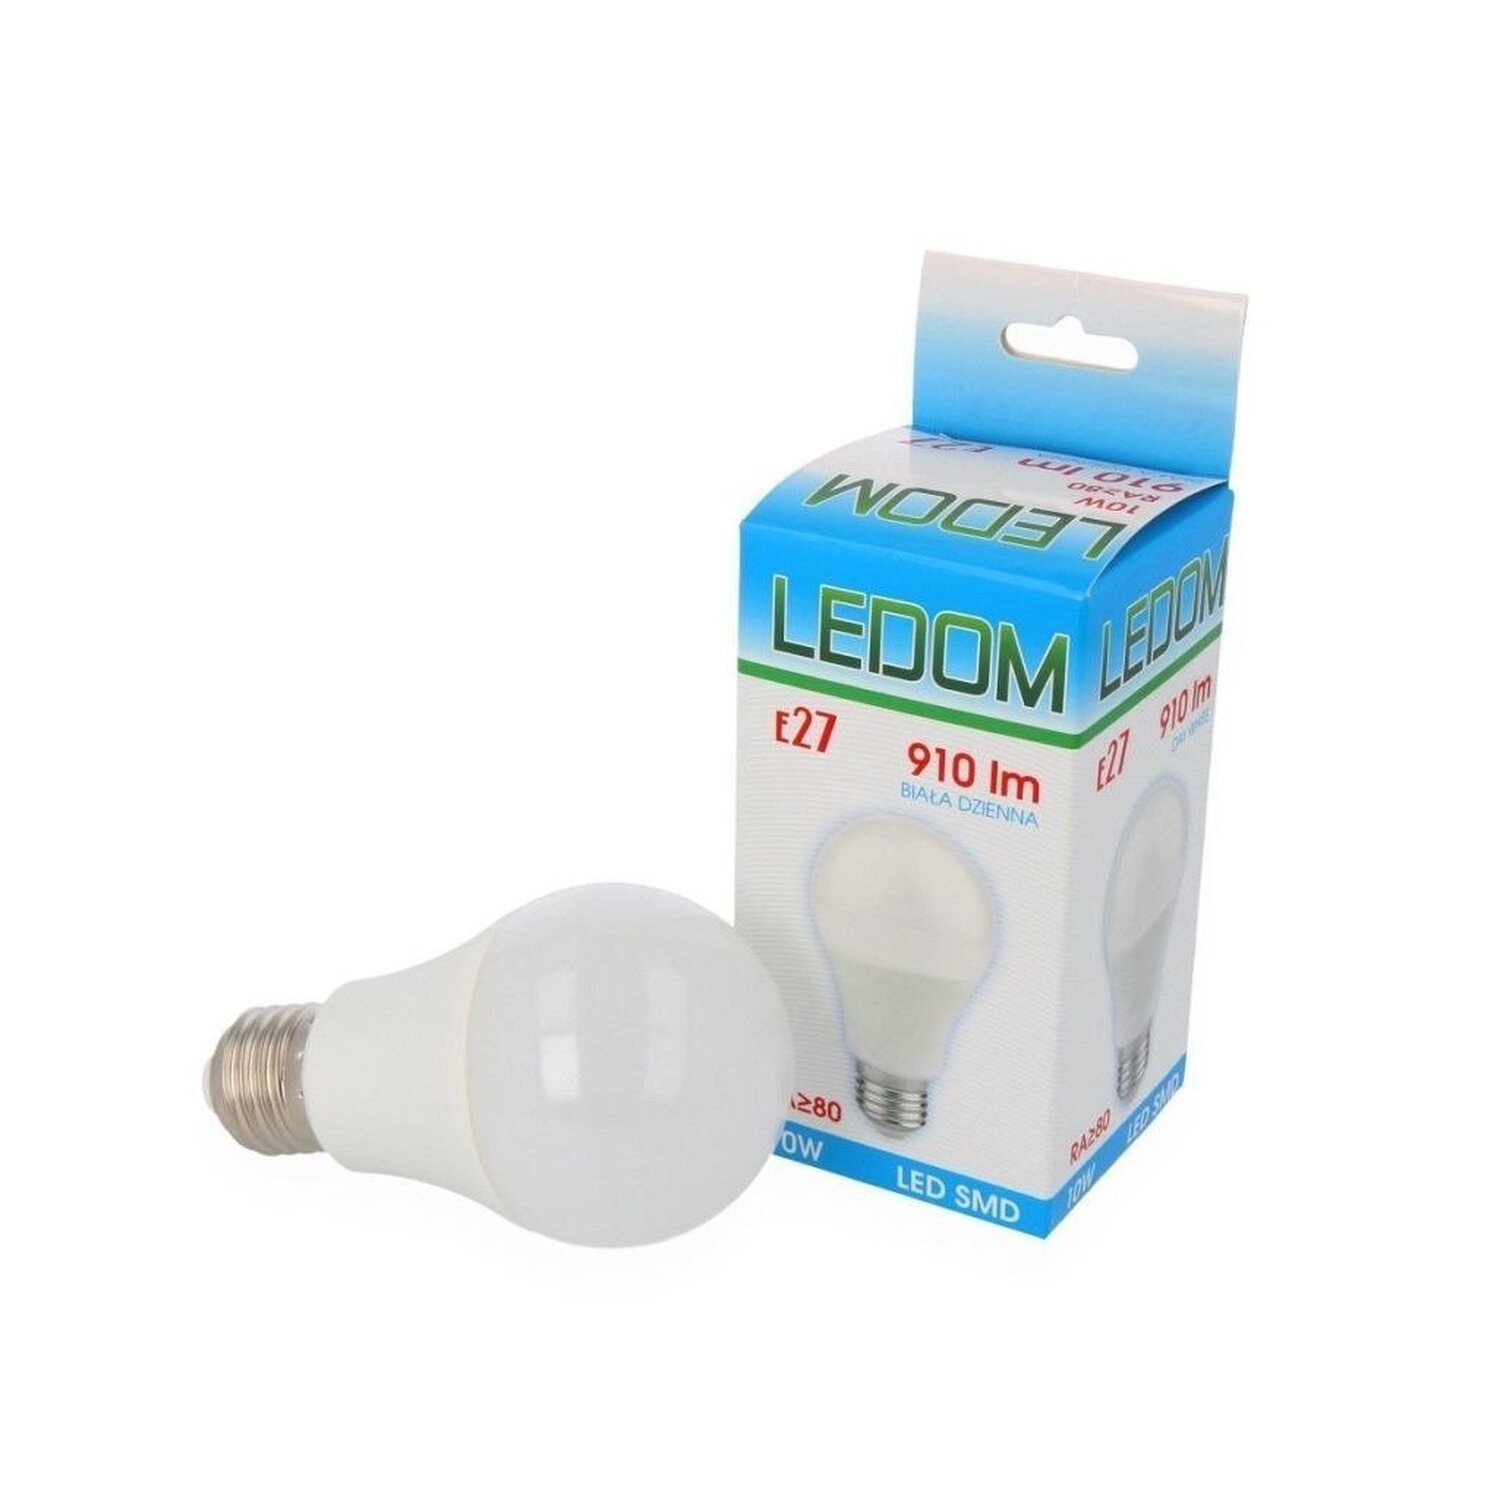 Stück LED A60 LED Ø60mm 10W Leuchtmittel E27 10 Neutralweiß Lumen LINE 220-240V 910